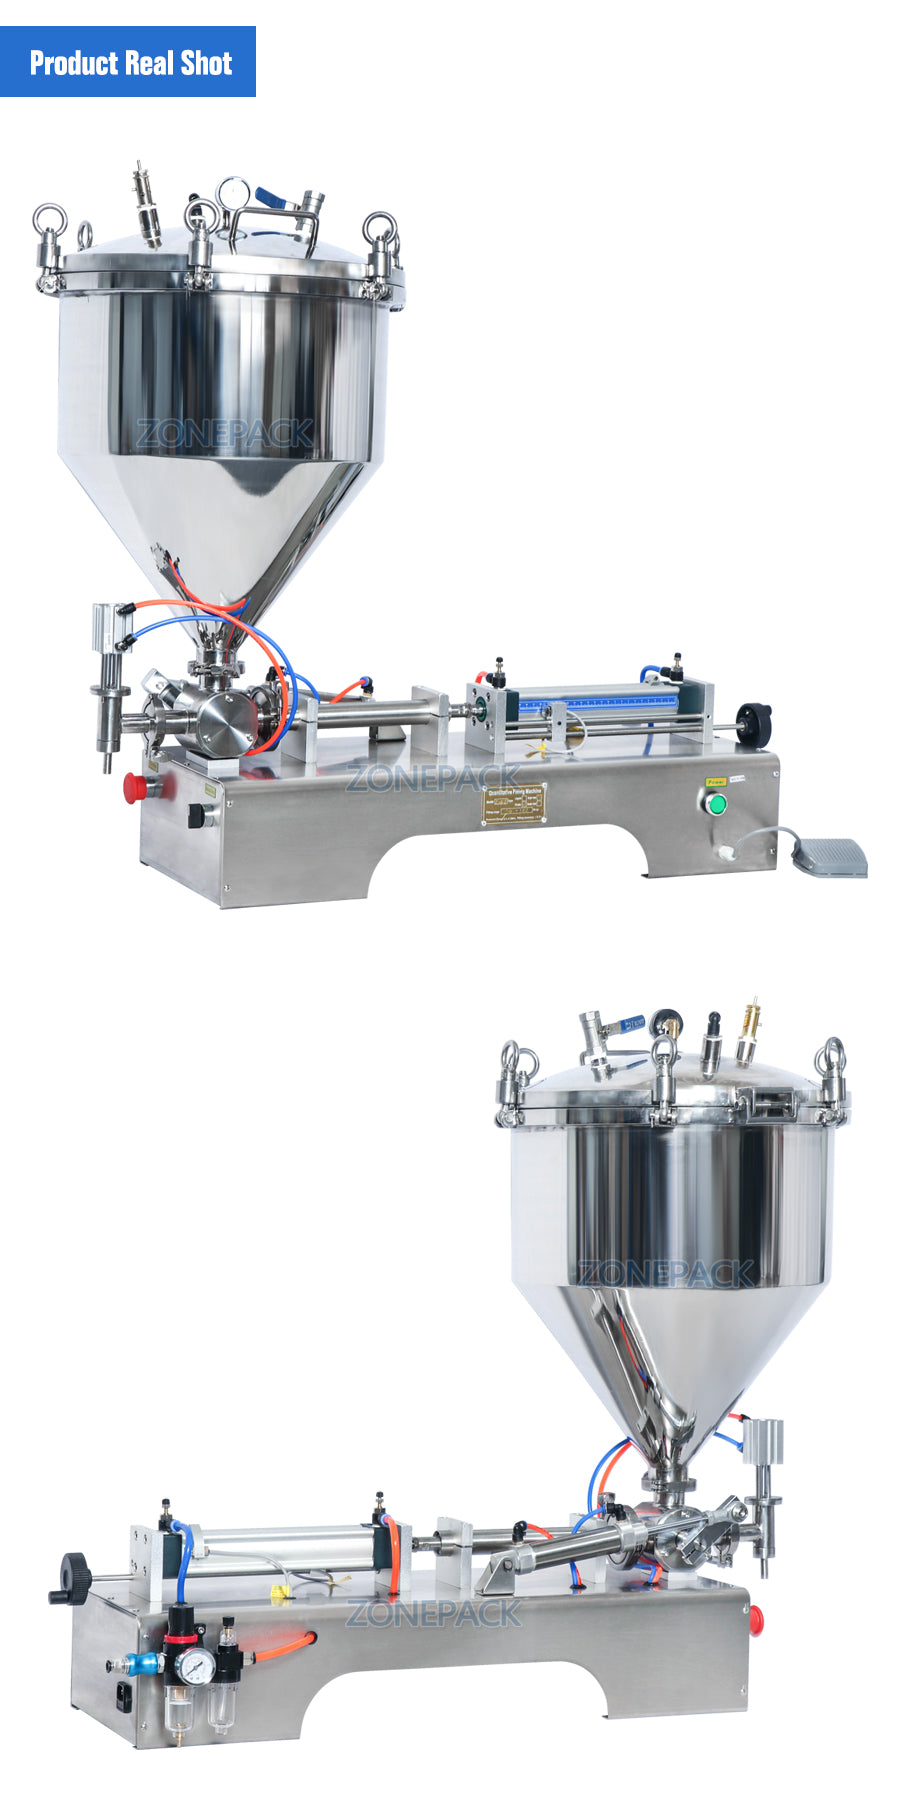 ZS-GTP1 Semi Auotmatic Pressurized Paste Filling Machine for Viscous Liquid Honey